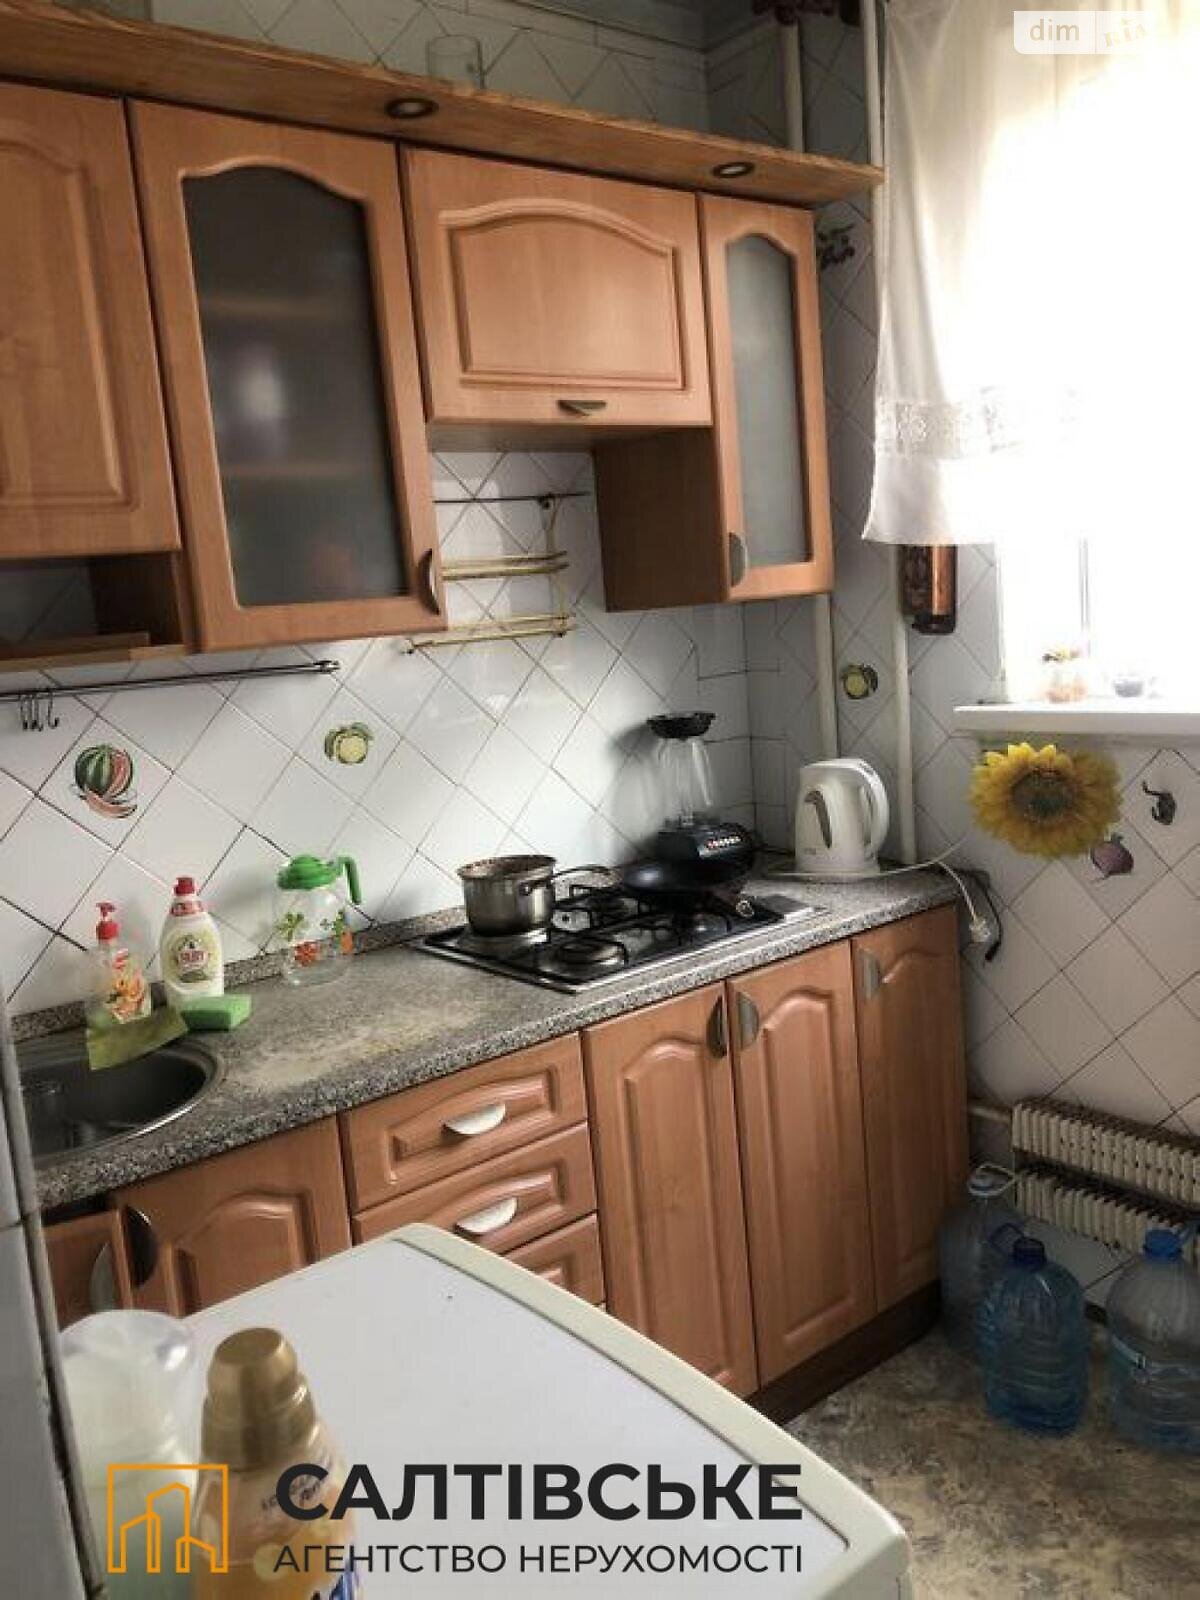 Продажа двухкомнатной квартиры в Харькове, на ул. Академика Павлова 140А, район Салтовка фото 1